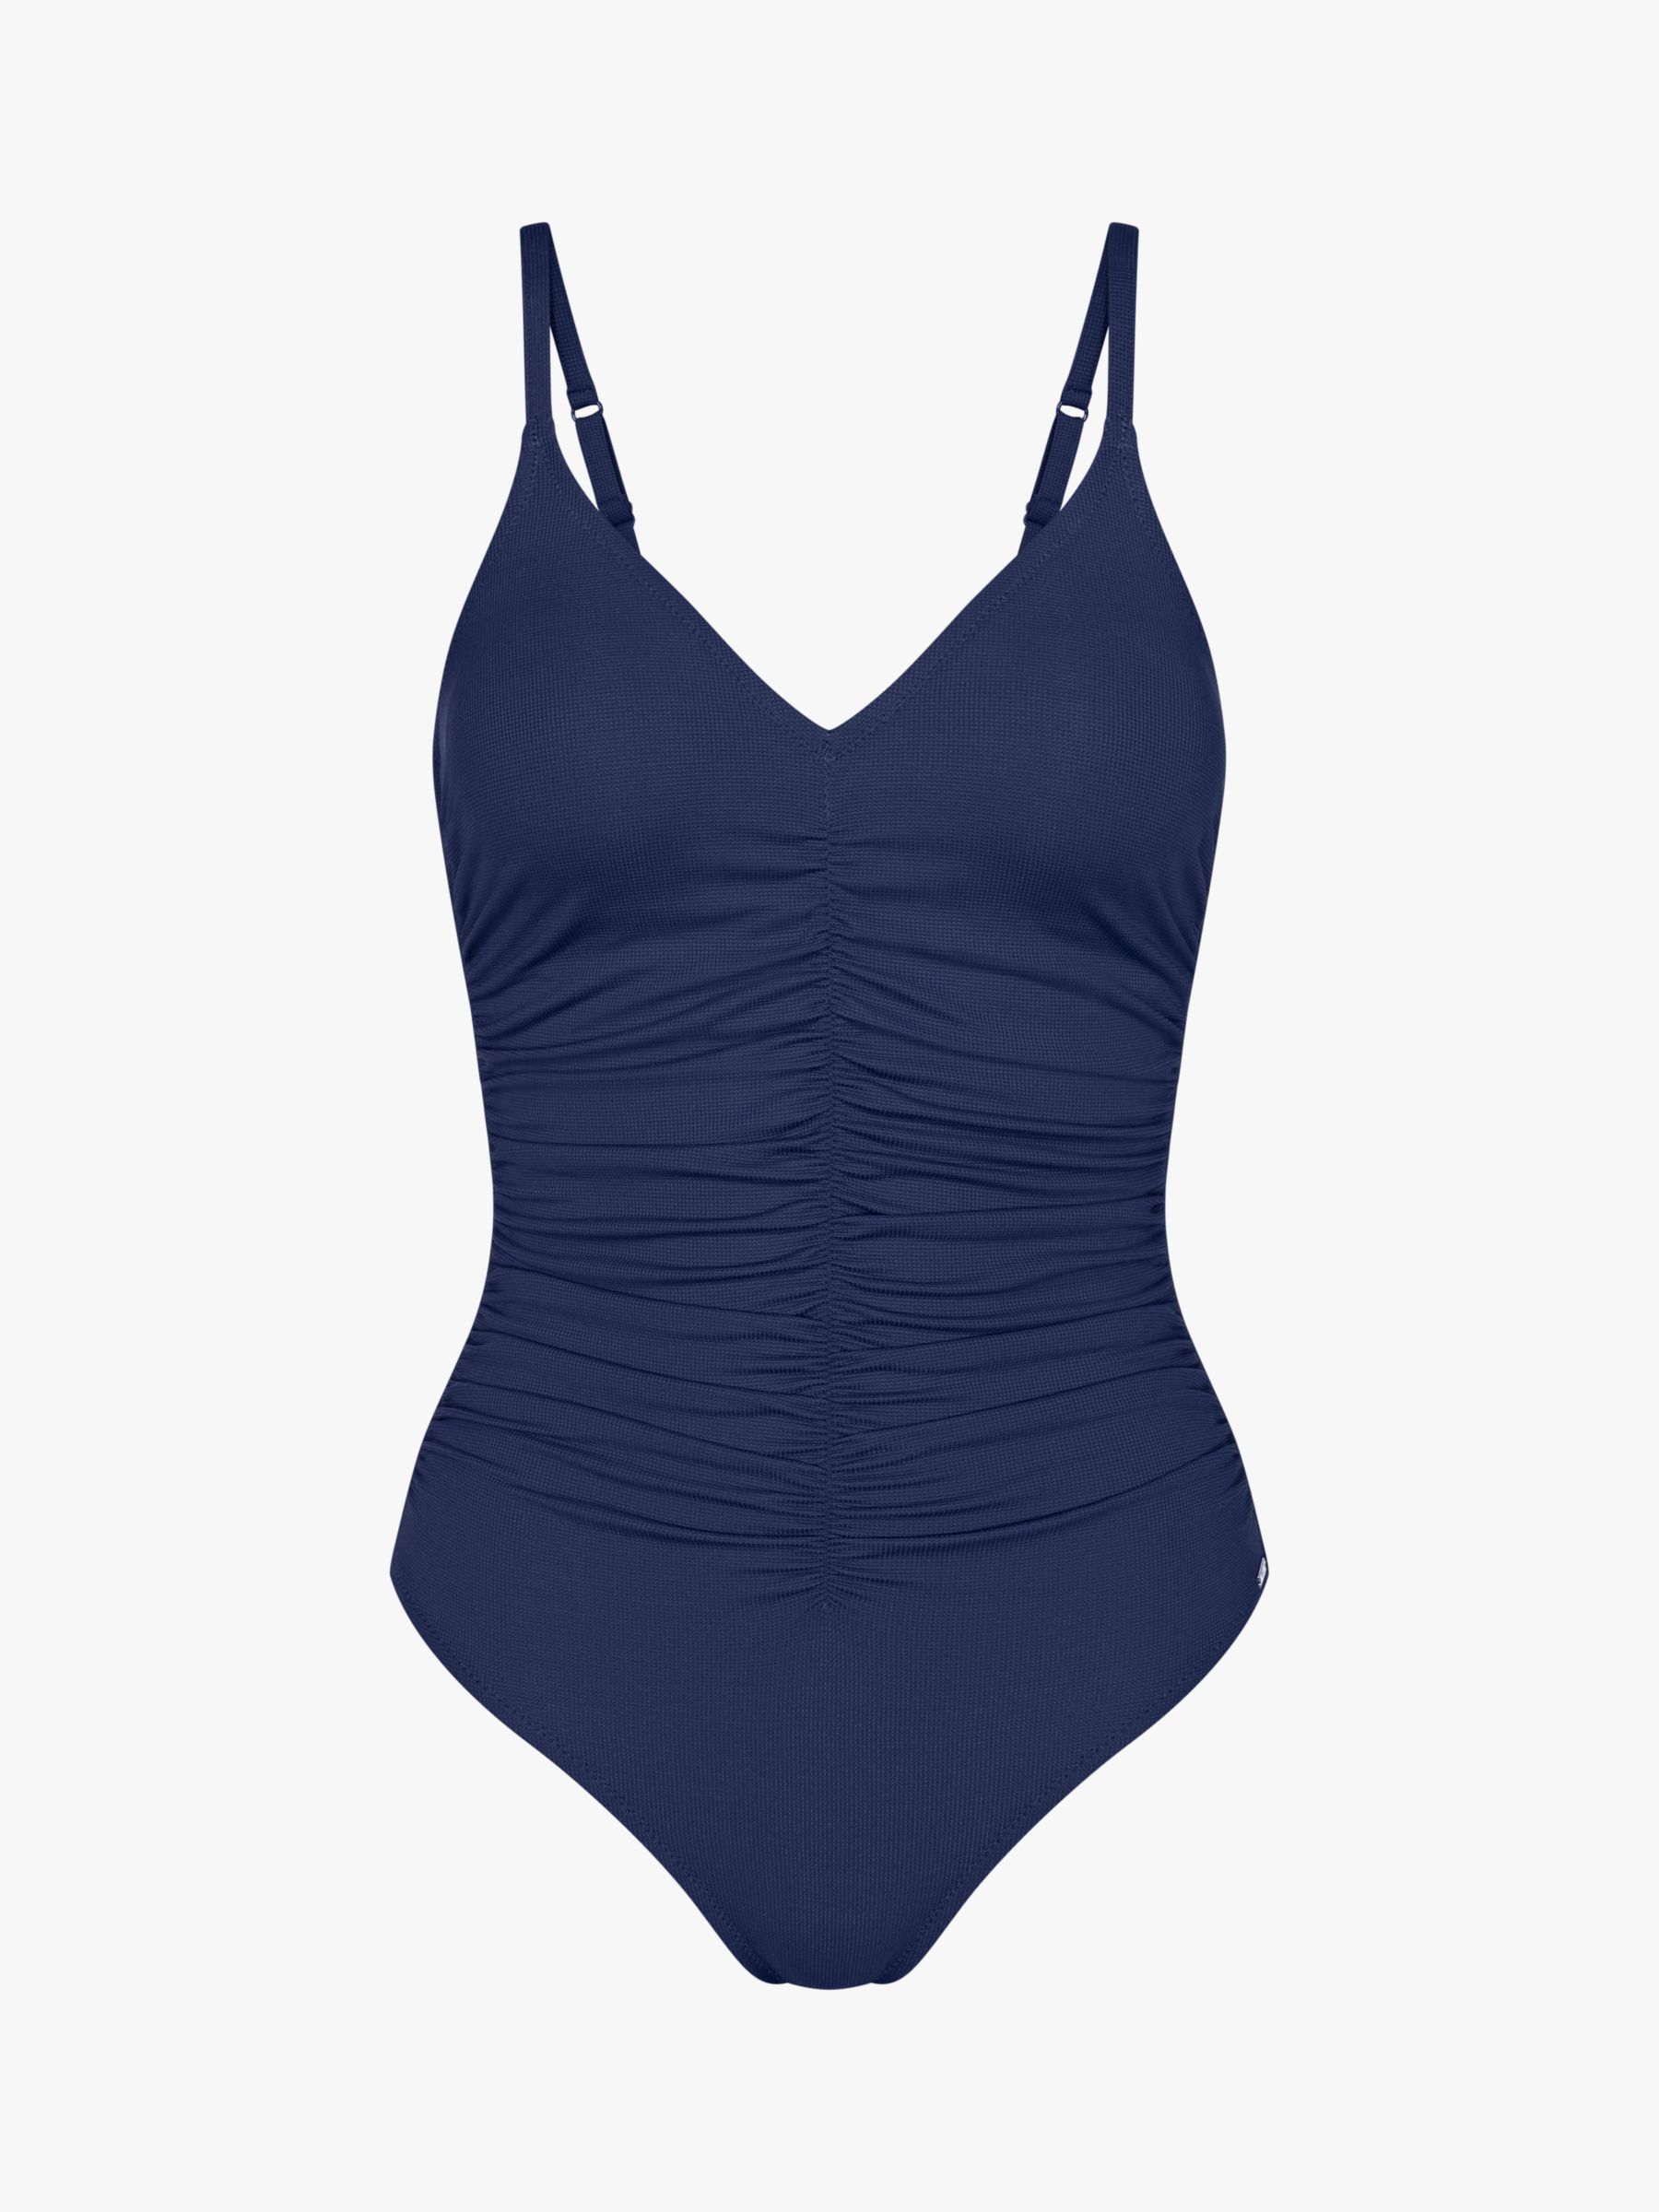 Triumph Summer Glow Padded Swimsuit, True Navy, True Navy, 38B